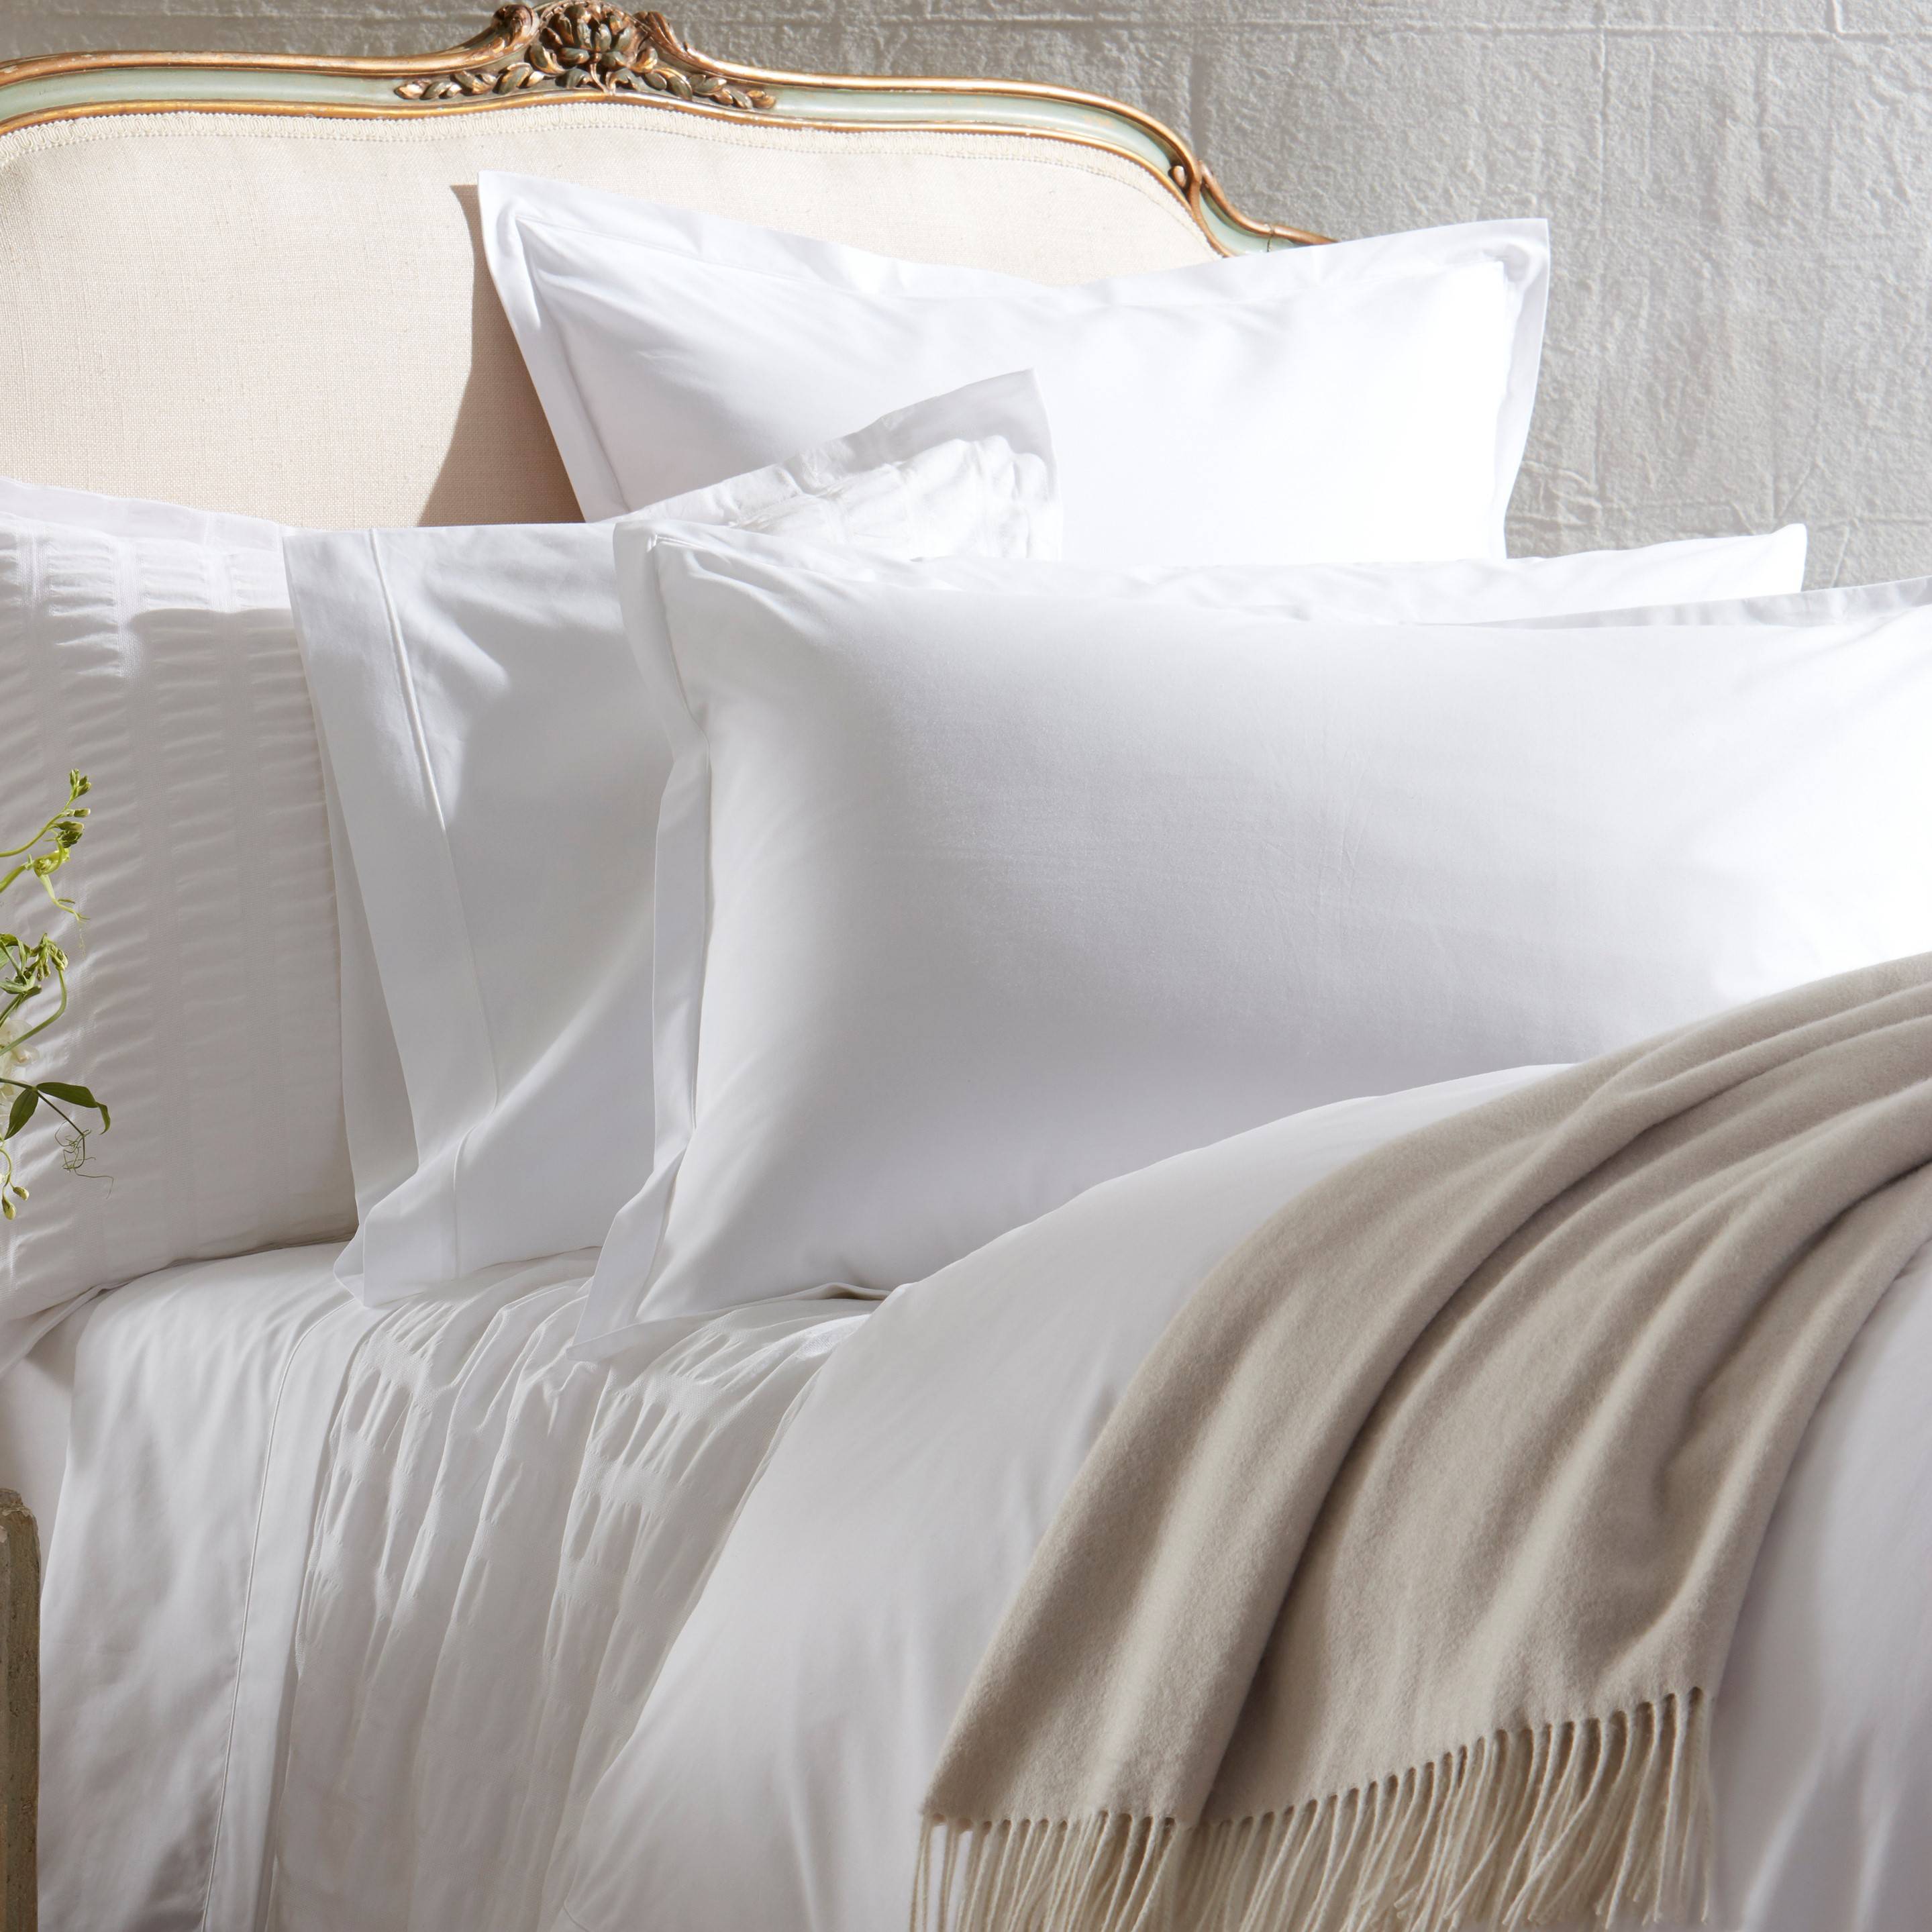 Matouk Luxury Sheets and Bed Linen | Best Matouk Luxury Linens